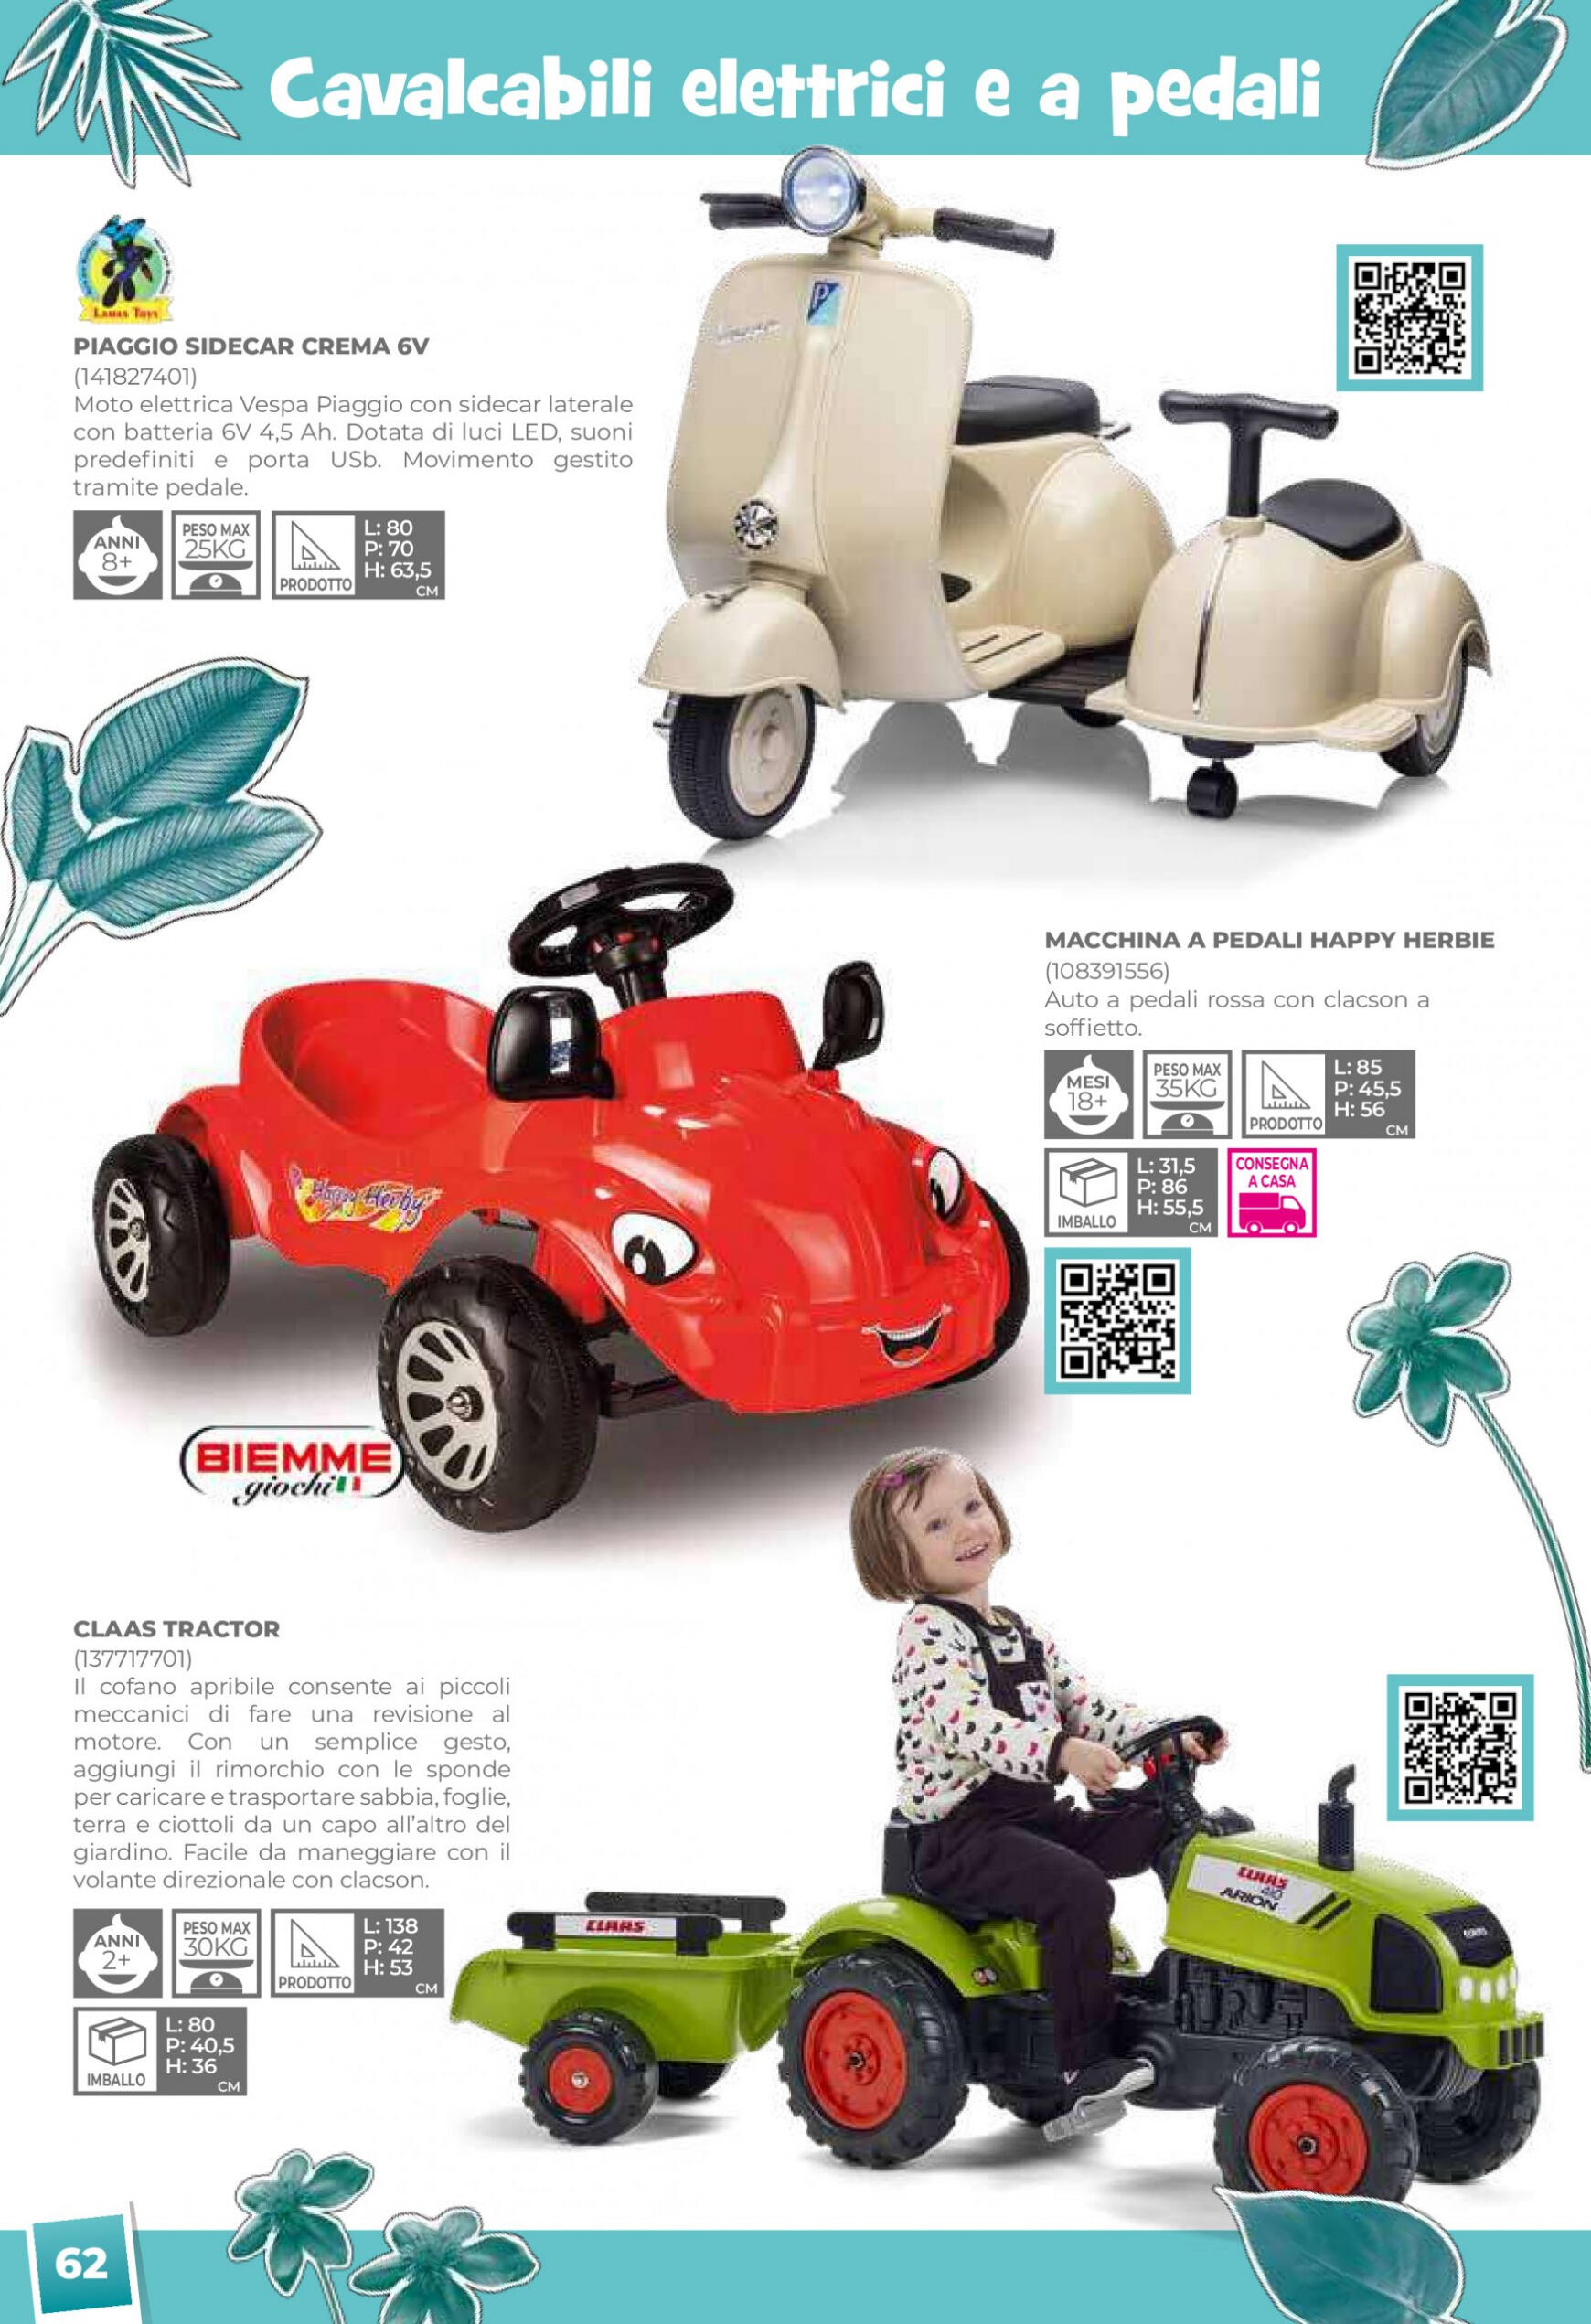 toys-center - Nuovo volantino Toys Center 01.05. - 31.12. - page: 64